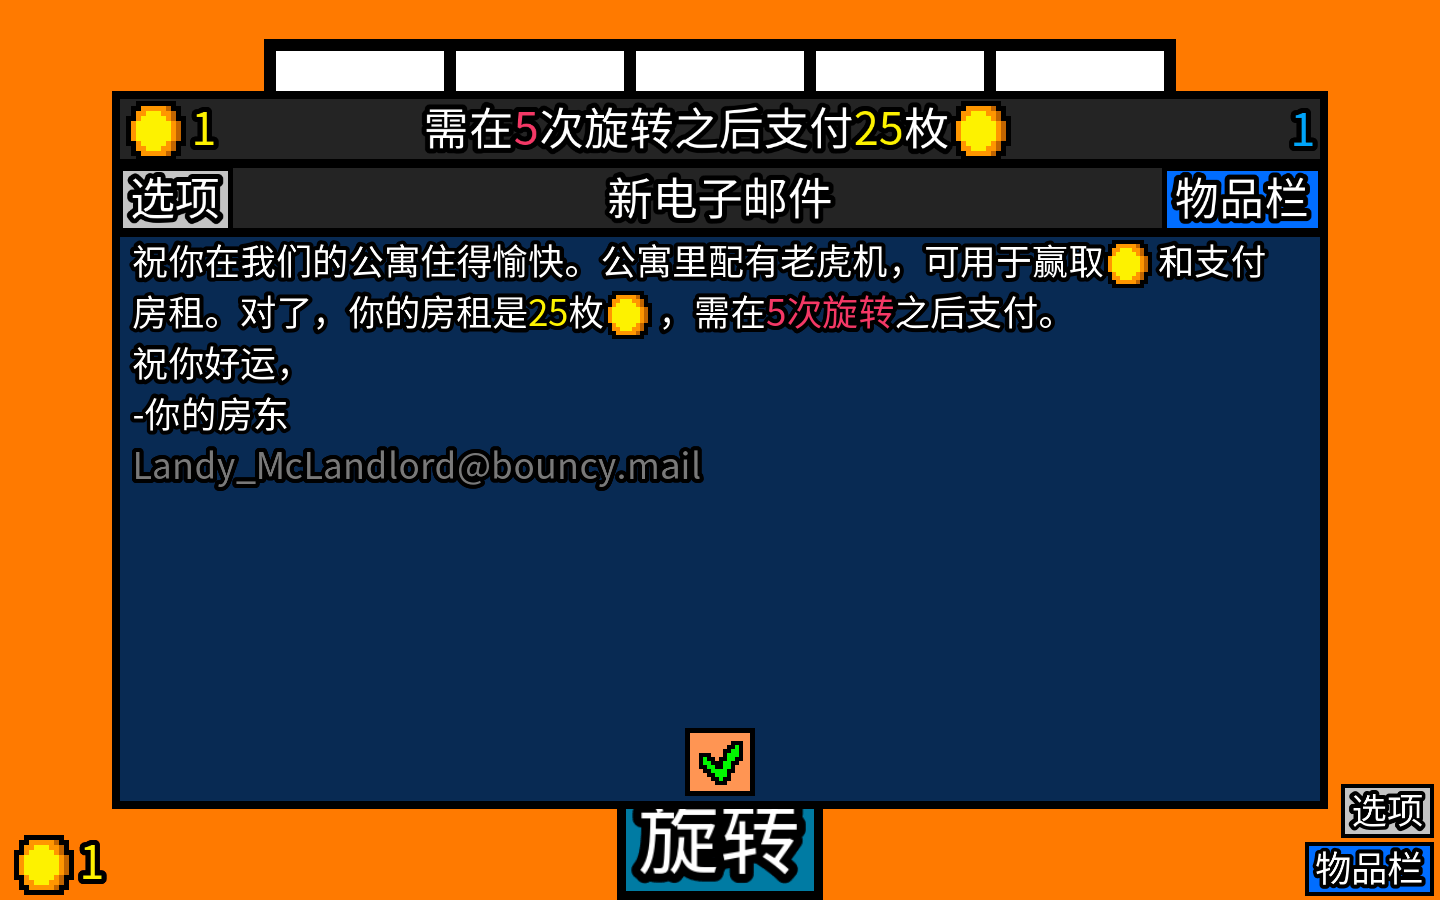 幸运房东 for Mac v1.1.8  Luck be a Landlord 中文原生版 苹果电脑